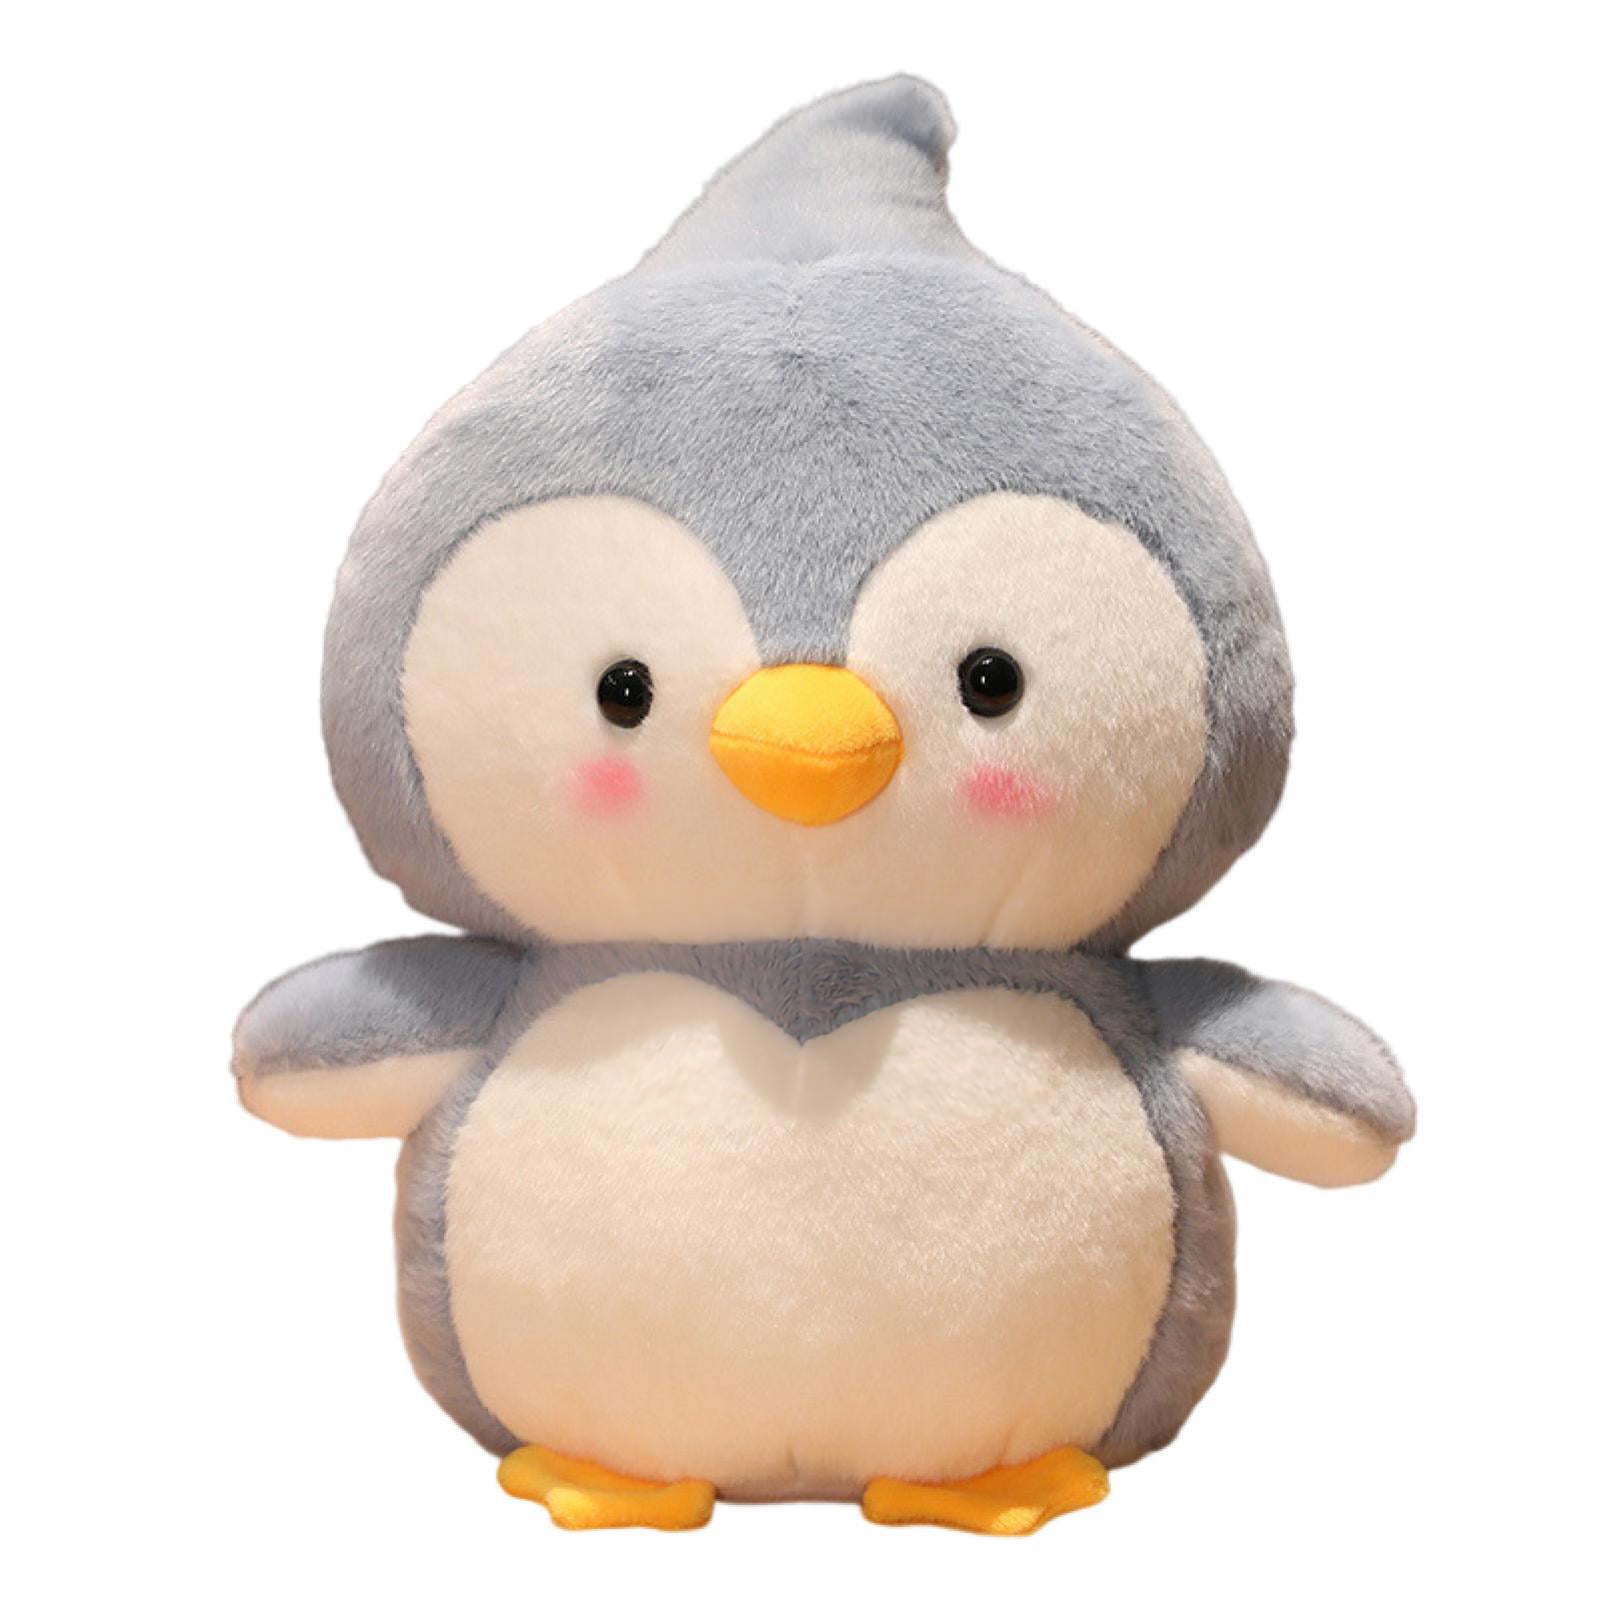 TOYBARN : Hatchimals Penguala Penguin Stuffed Plush Toy Character 9 Inch